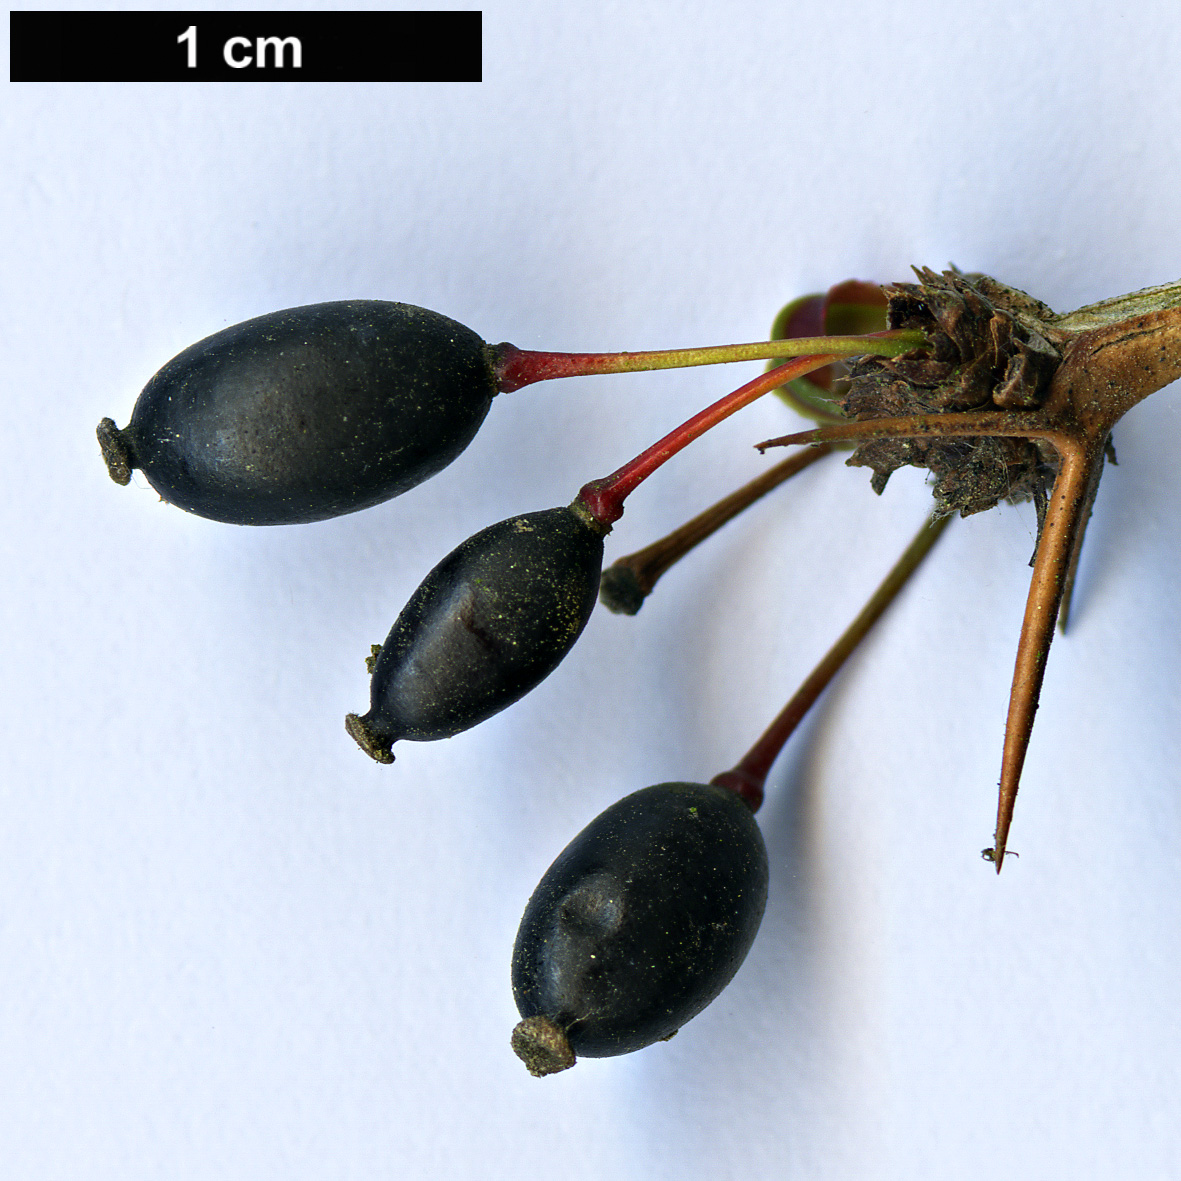 High resolution image: Family: Berberidaceae - Genus: Berberis - Taxon: julianae